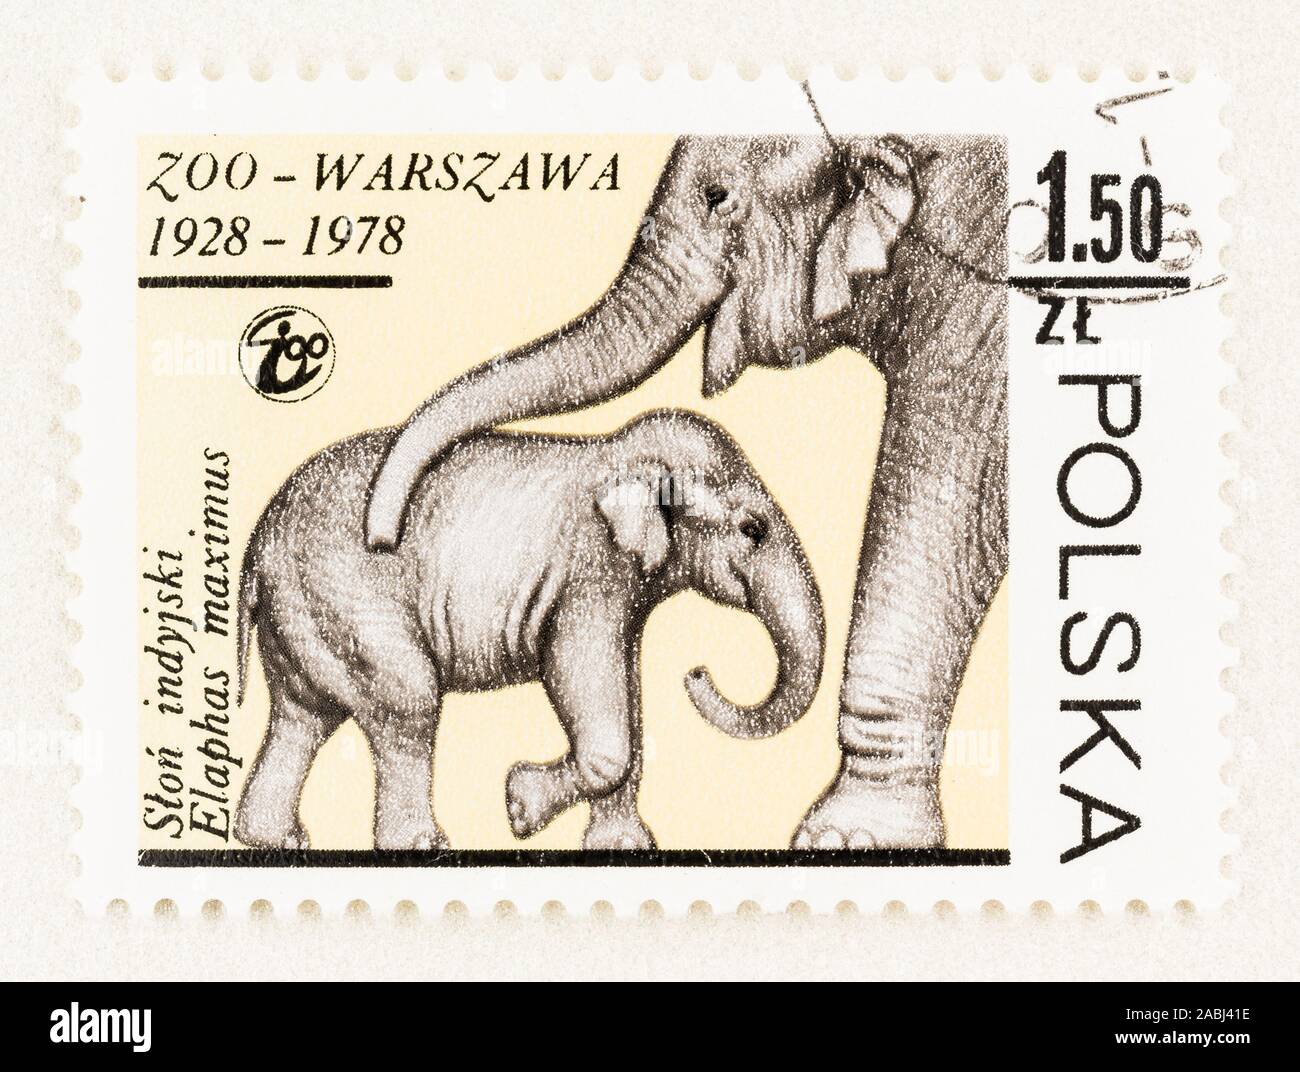 SEATTLE WASHINGTON - November 21, 2019: Polish postage stamp celebrating 50th anniversary of Warsaw zoo. Scott # 2303 issued in 1978. Stock Photo